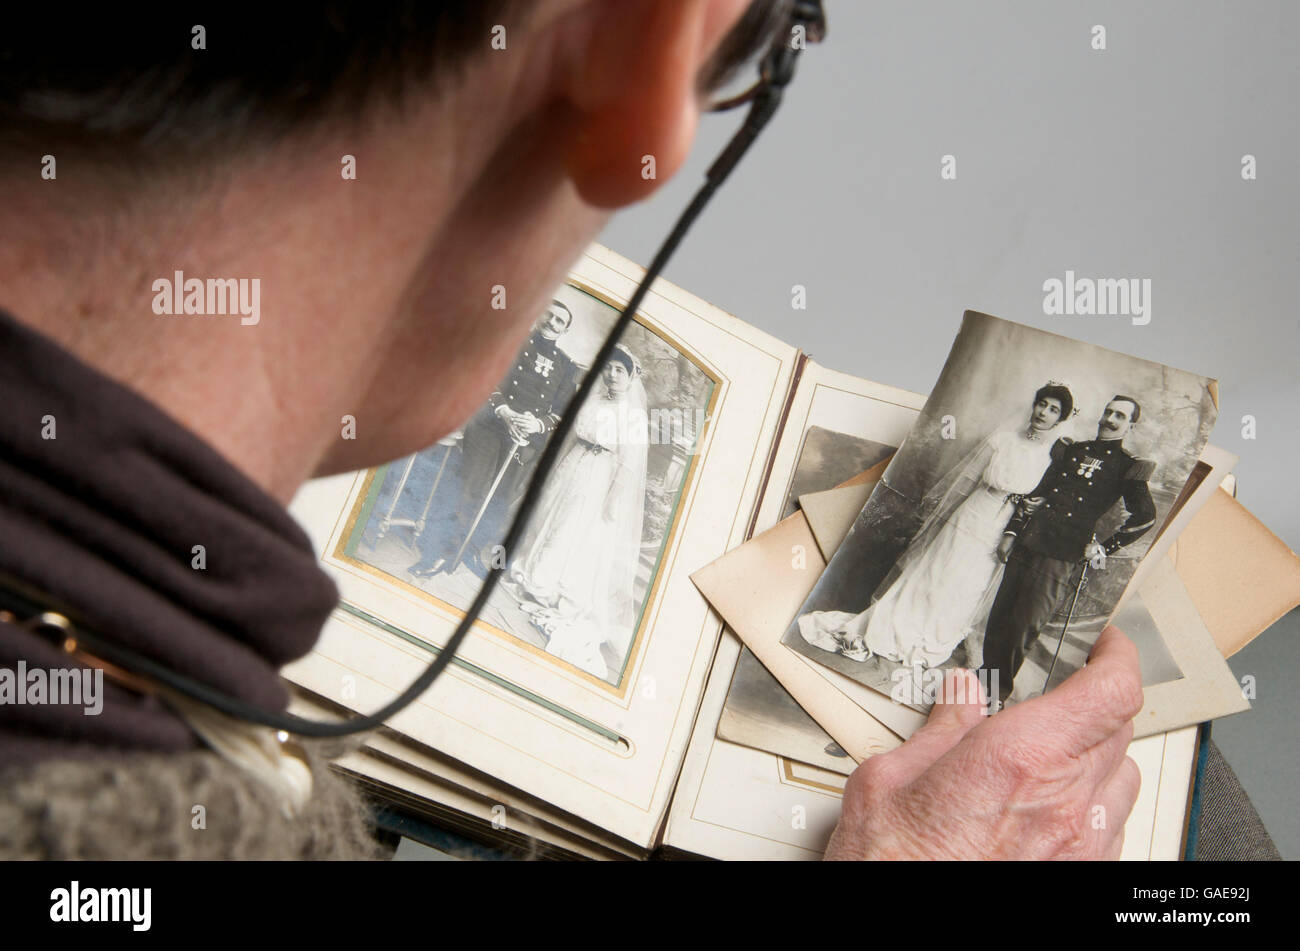 Homme qui regarde une vieille photo album Photo Stock - Alamy